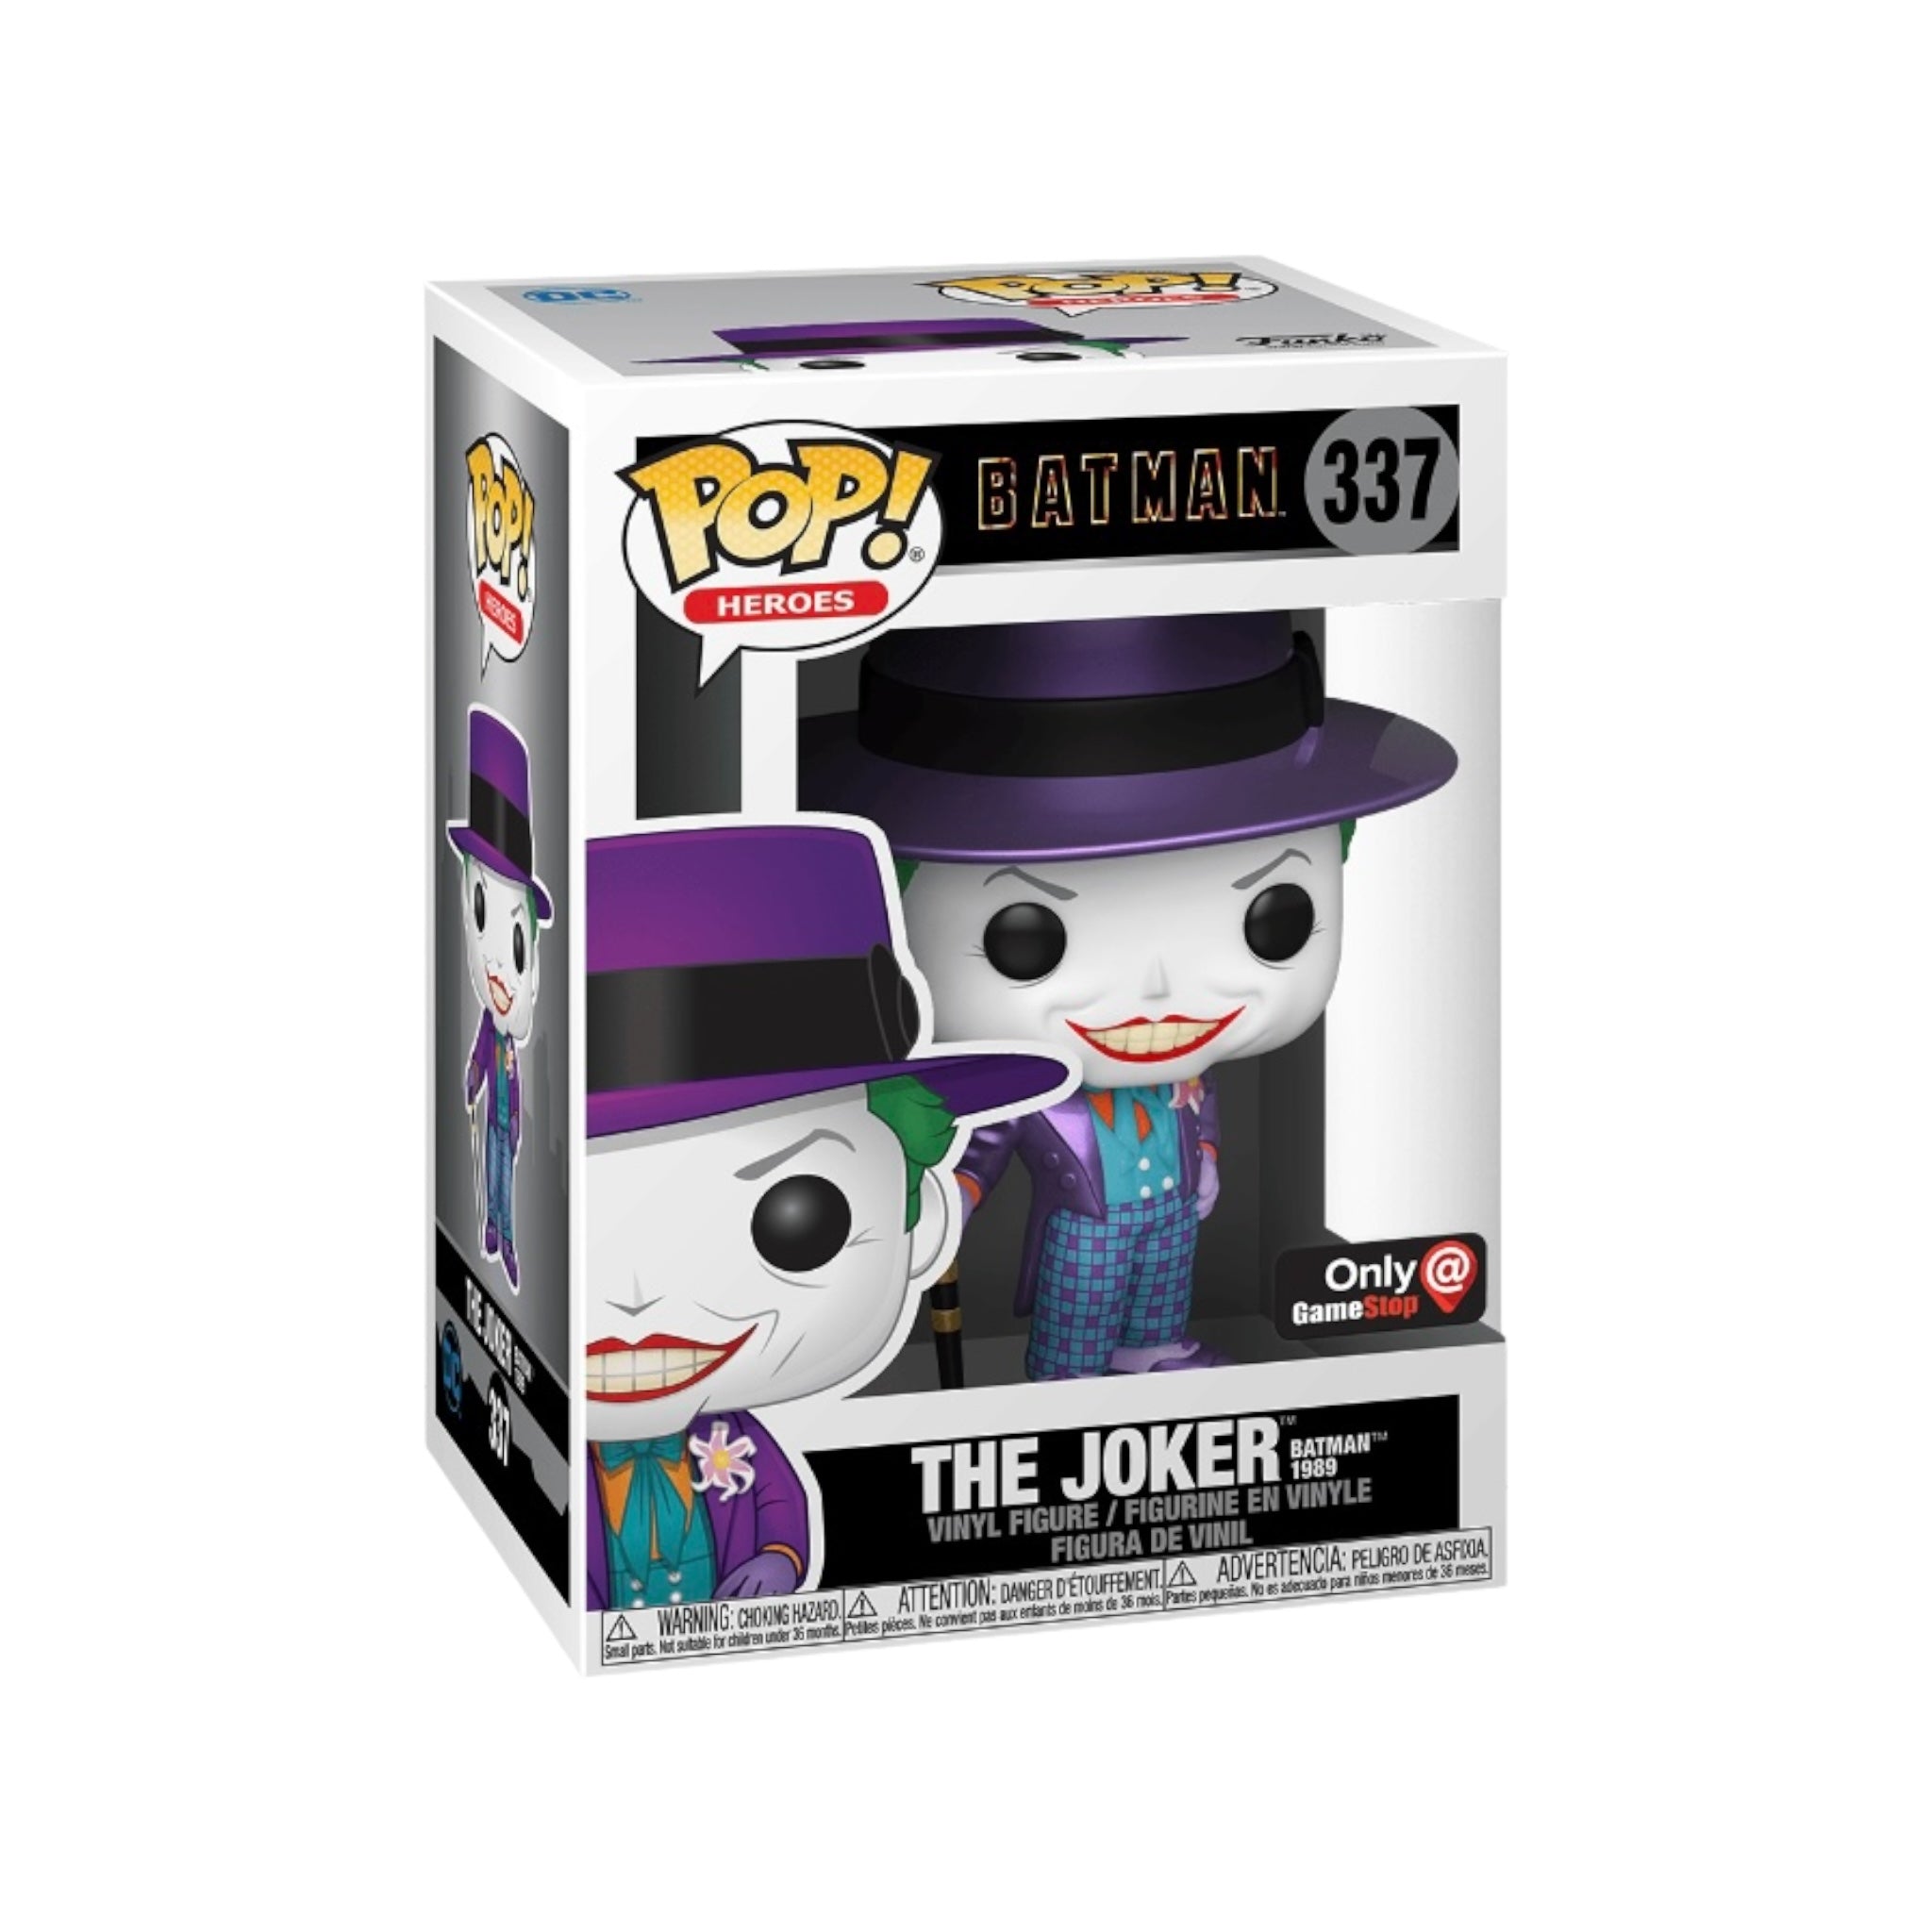 The Joker [Batman 1989] #337 (Metallic) Funko Pop! - Batman - GameStop Exclusive